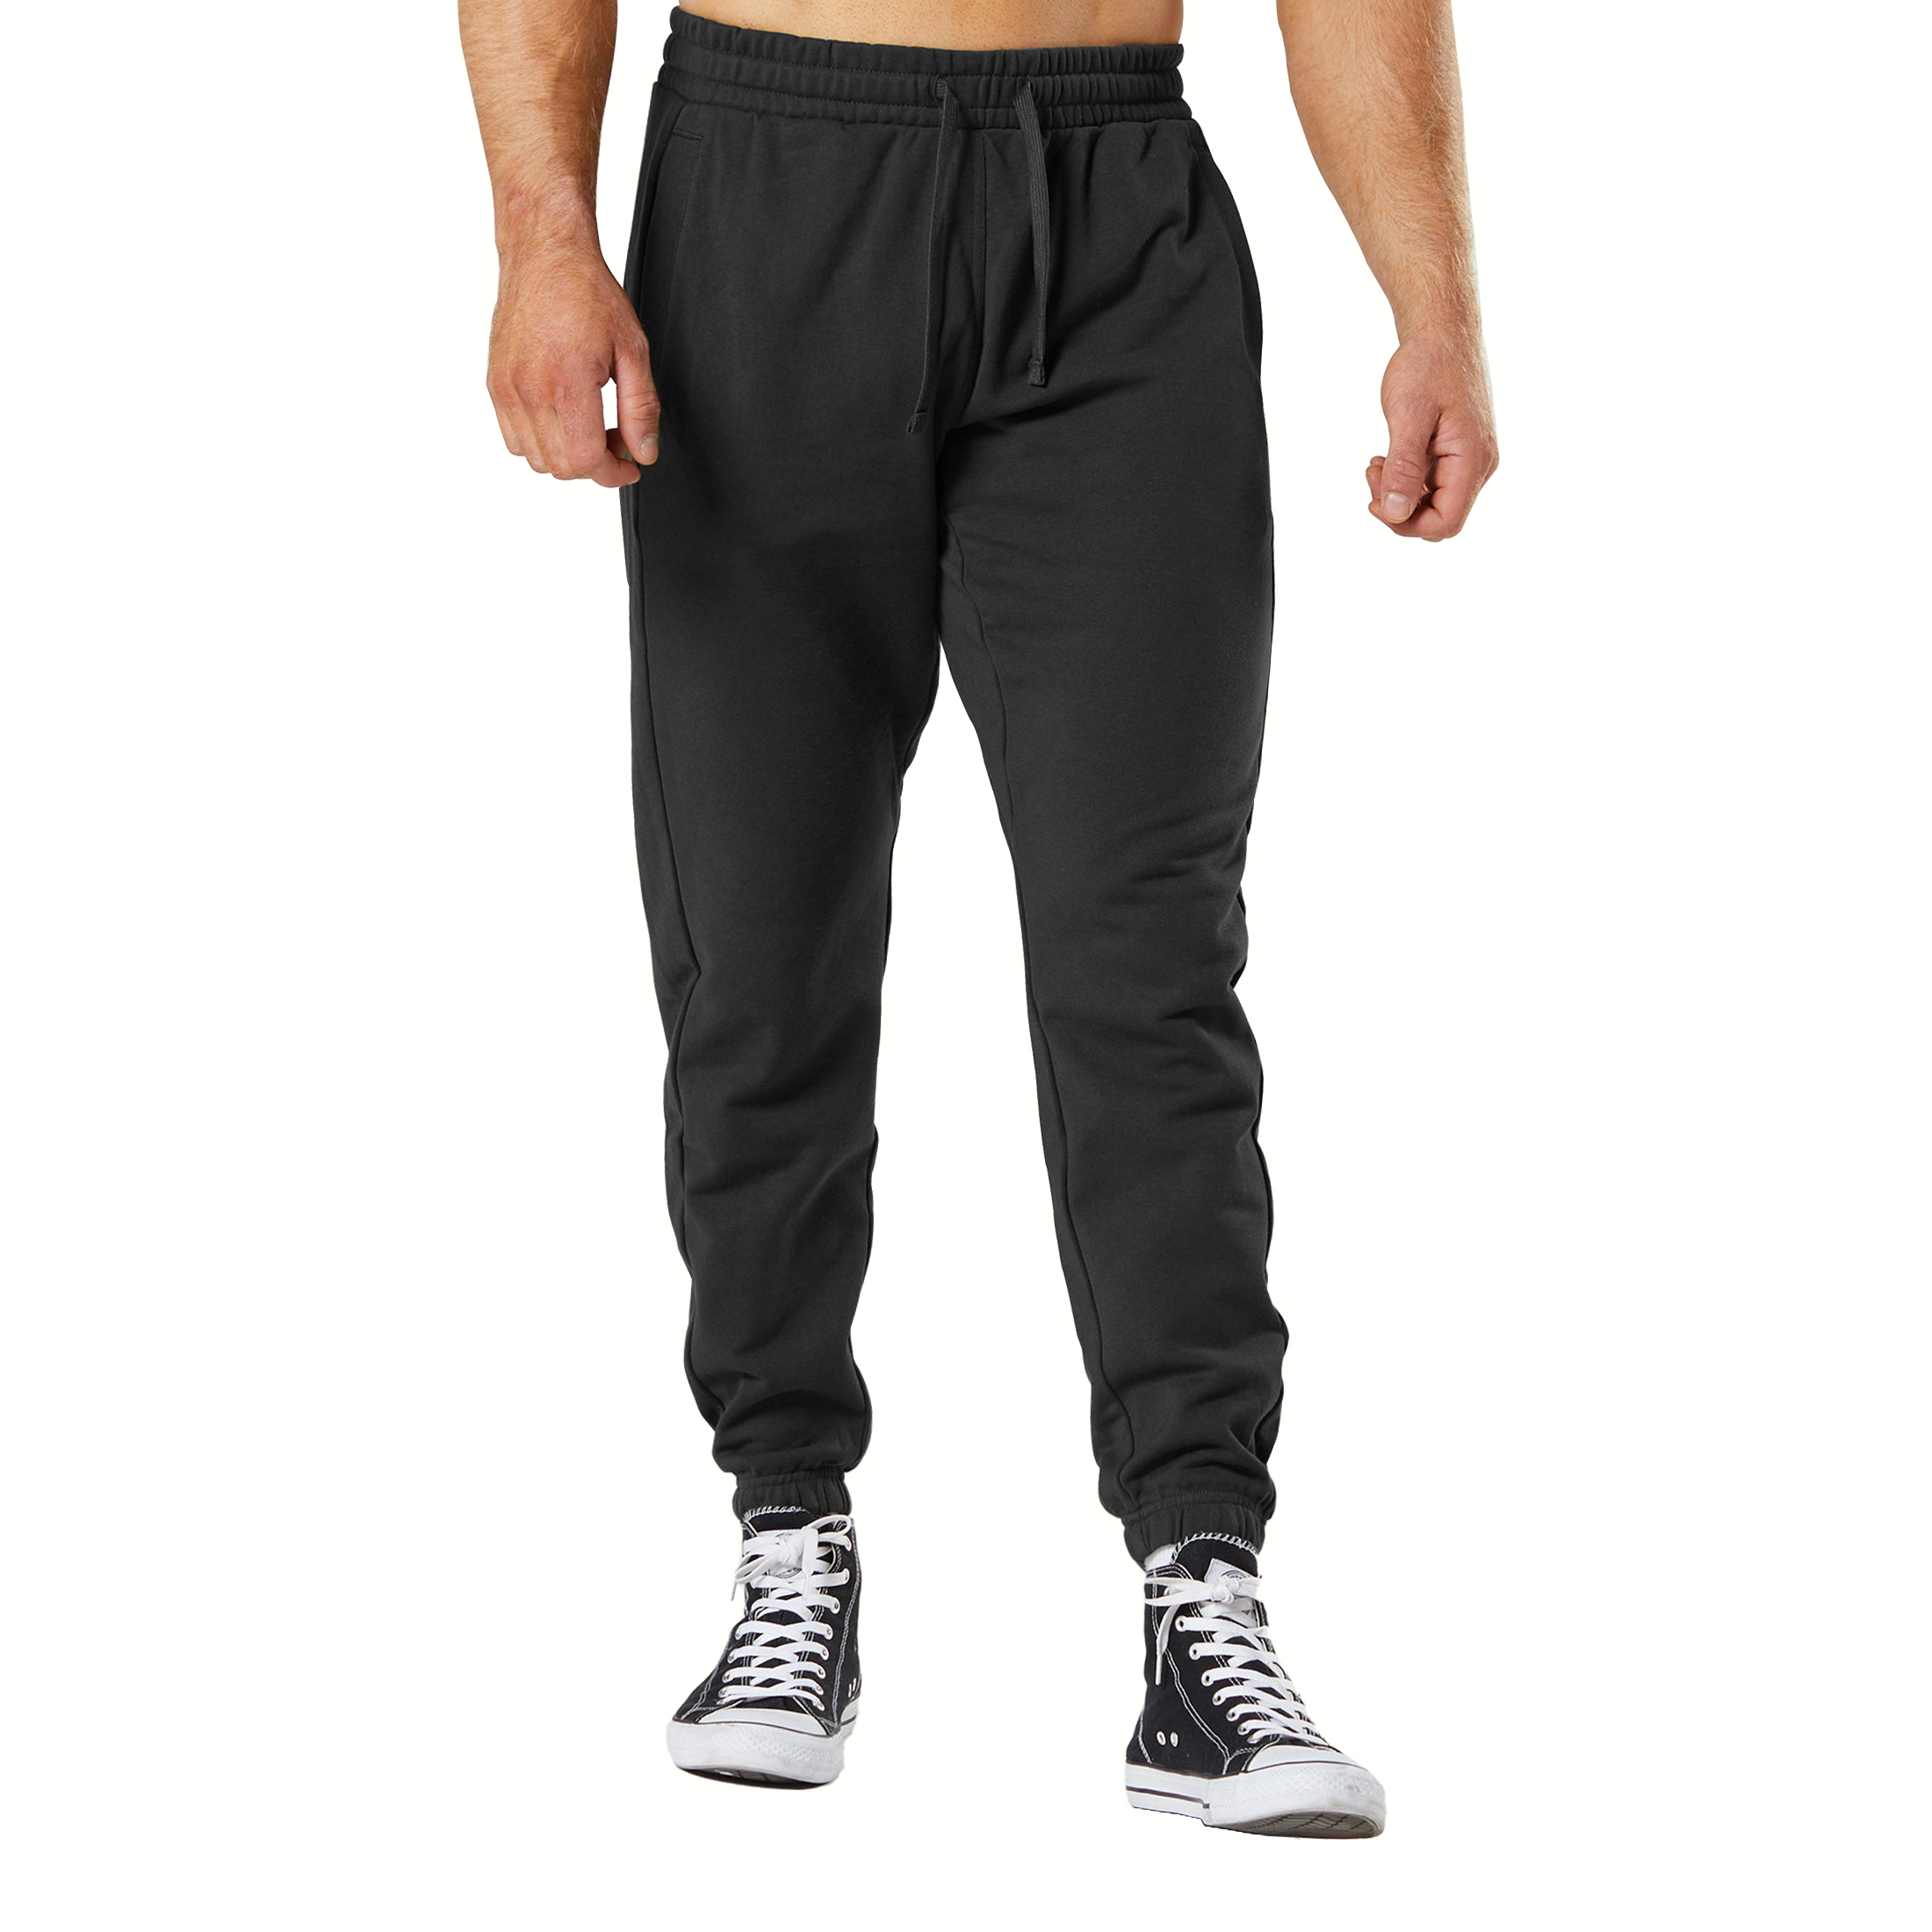 3-Pack: Men's Casual Fleece-Lined Elastic Bottom Sweatpants Jogger Pants With Pockets - Solid & Stripes, Medium